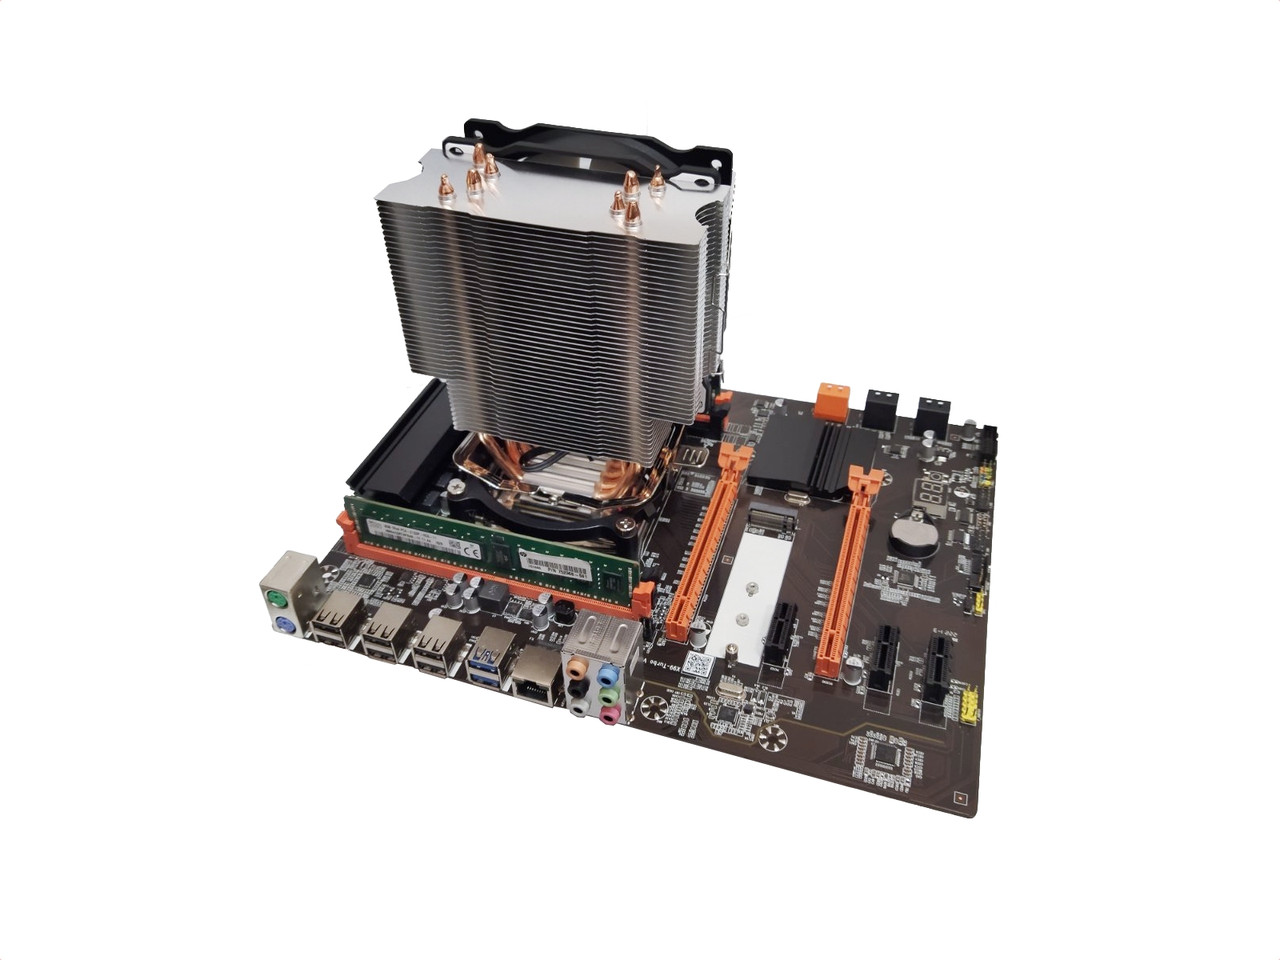 Комплект X99 + Xeon E5-2666v3 + 16 GB RAM + Кулер, LGA 2011v3